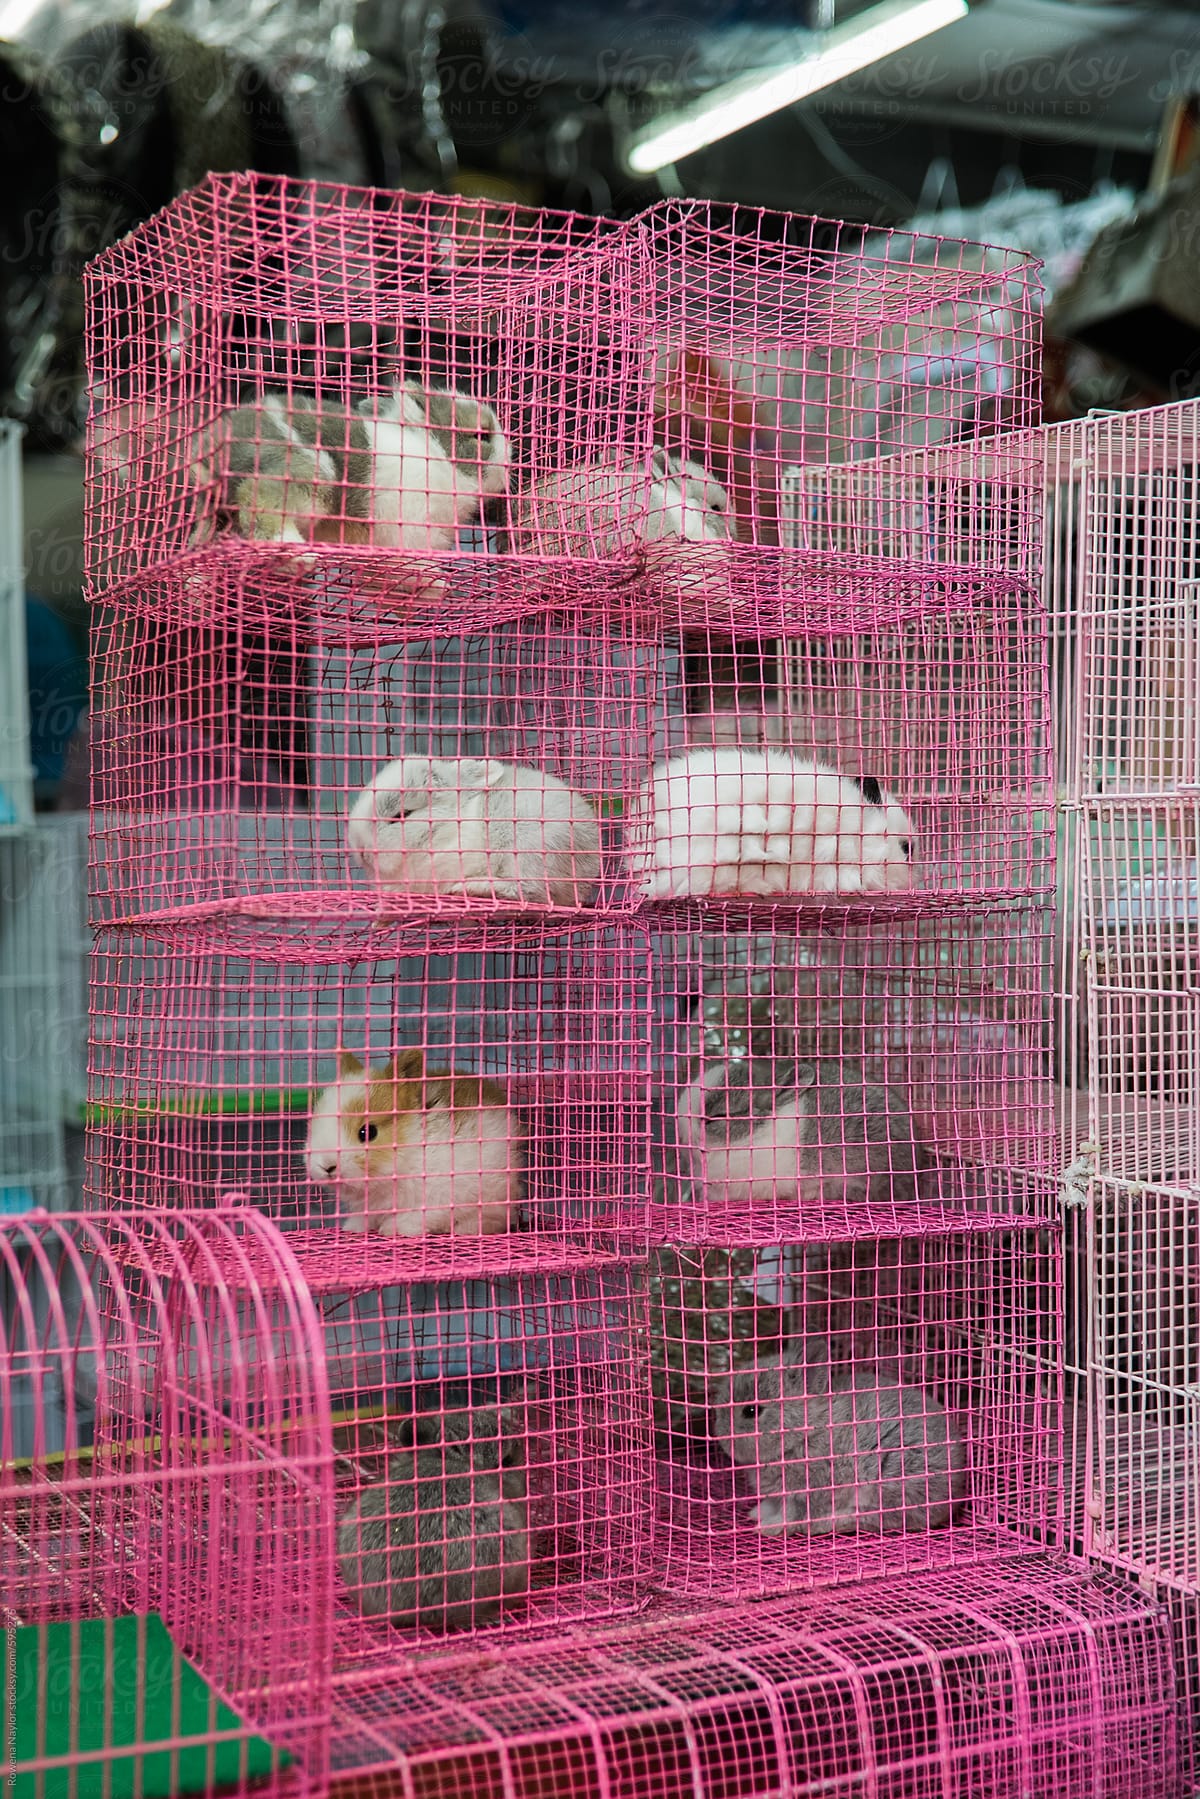 Miniature Bunnies for sale at Chatuchak Market, Bangkok